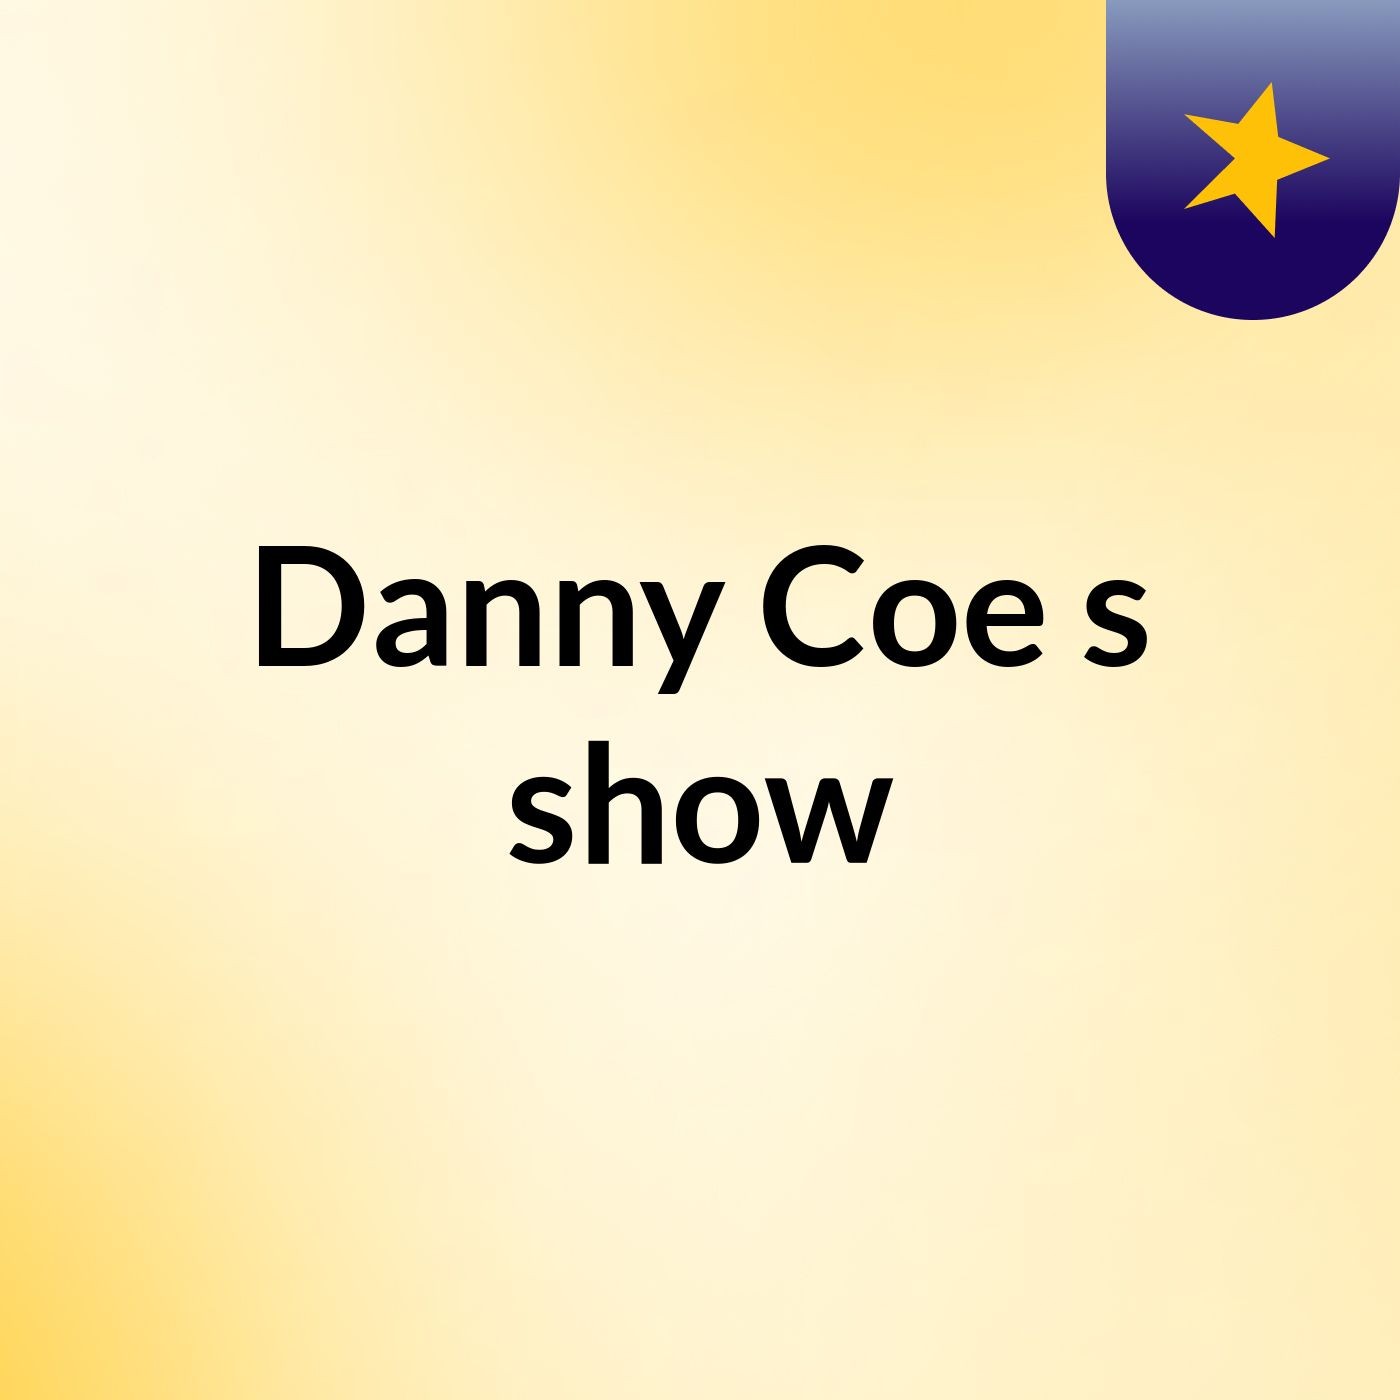 Danny Coe's show